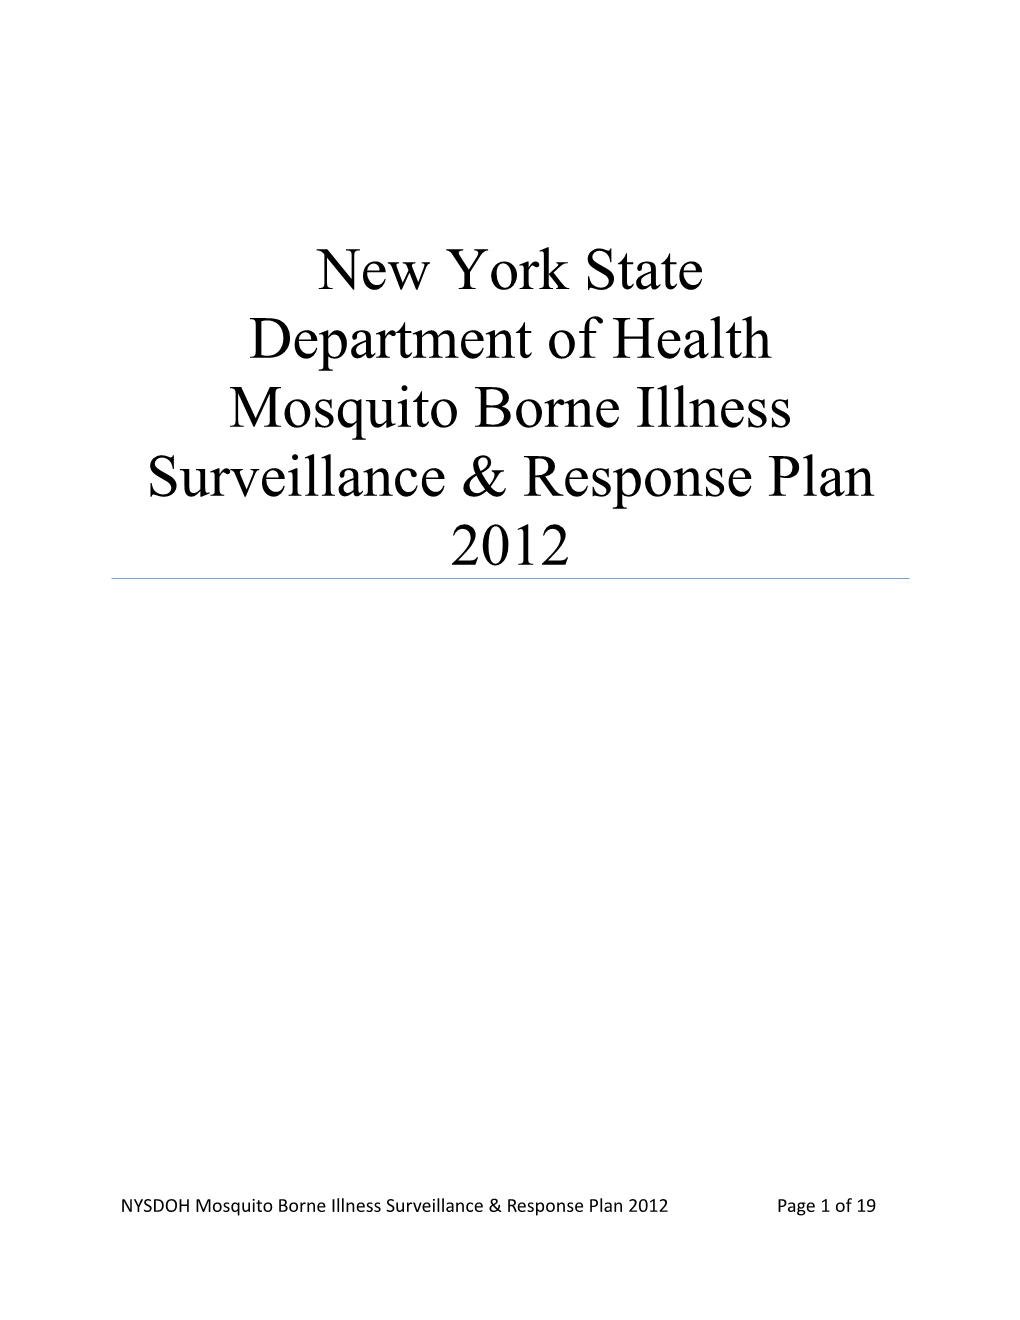 2012 Mosquito Borne Illness Surveillance & Response Plan